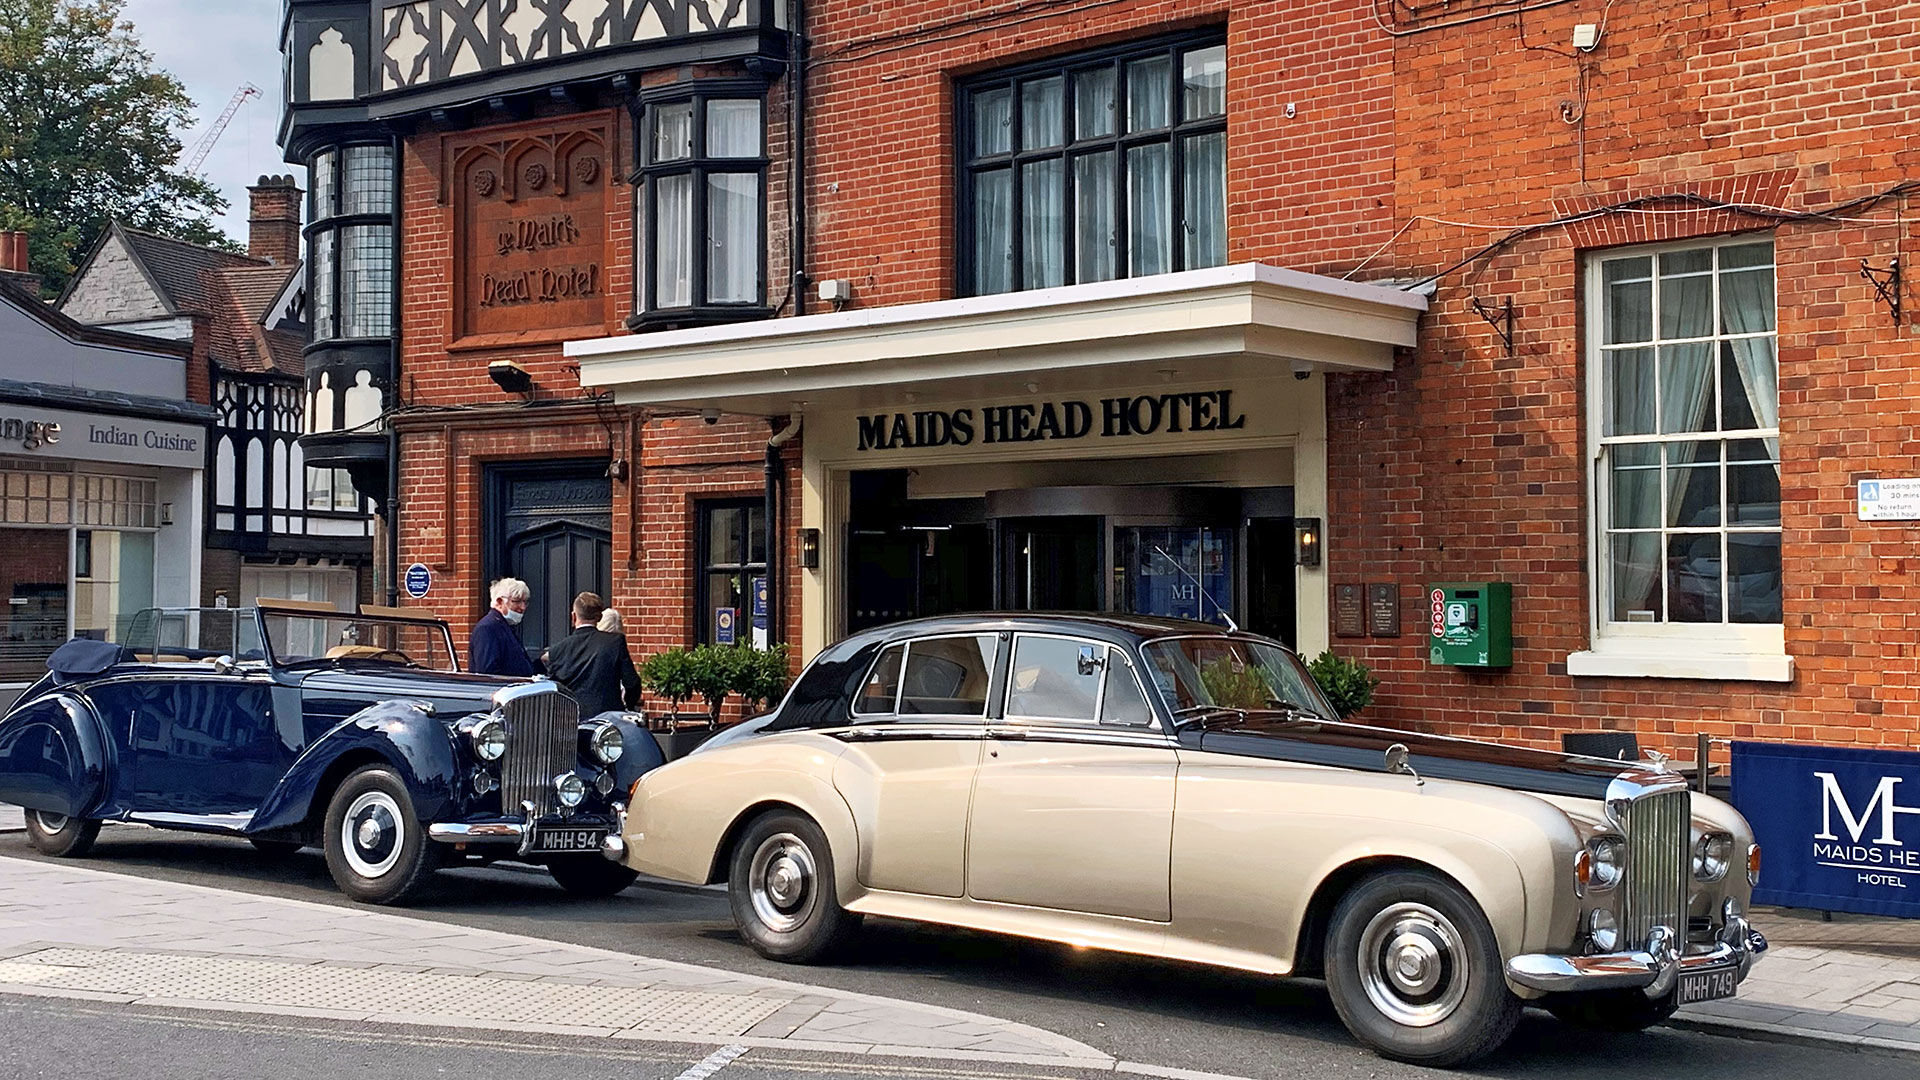 Chauffer driven Bentley outside the hotel - Maids Head Hotel, Norwich